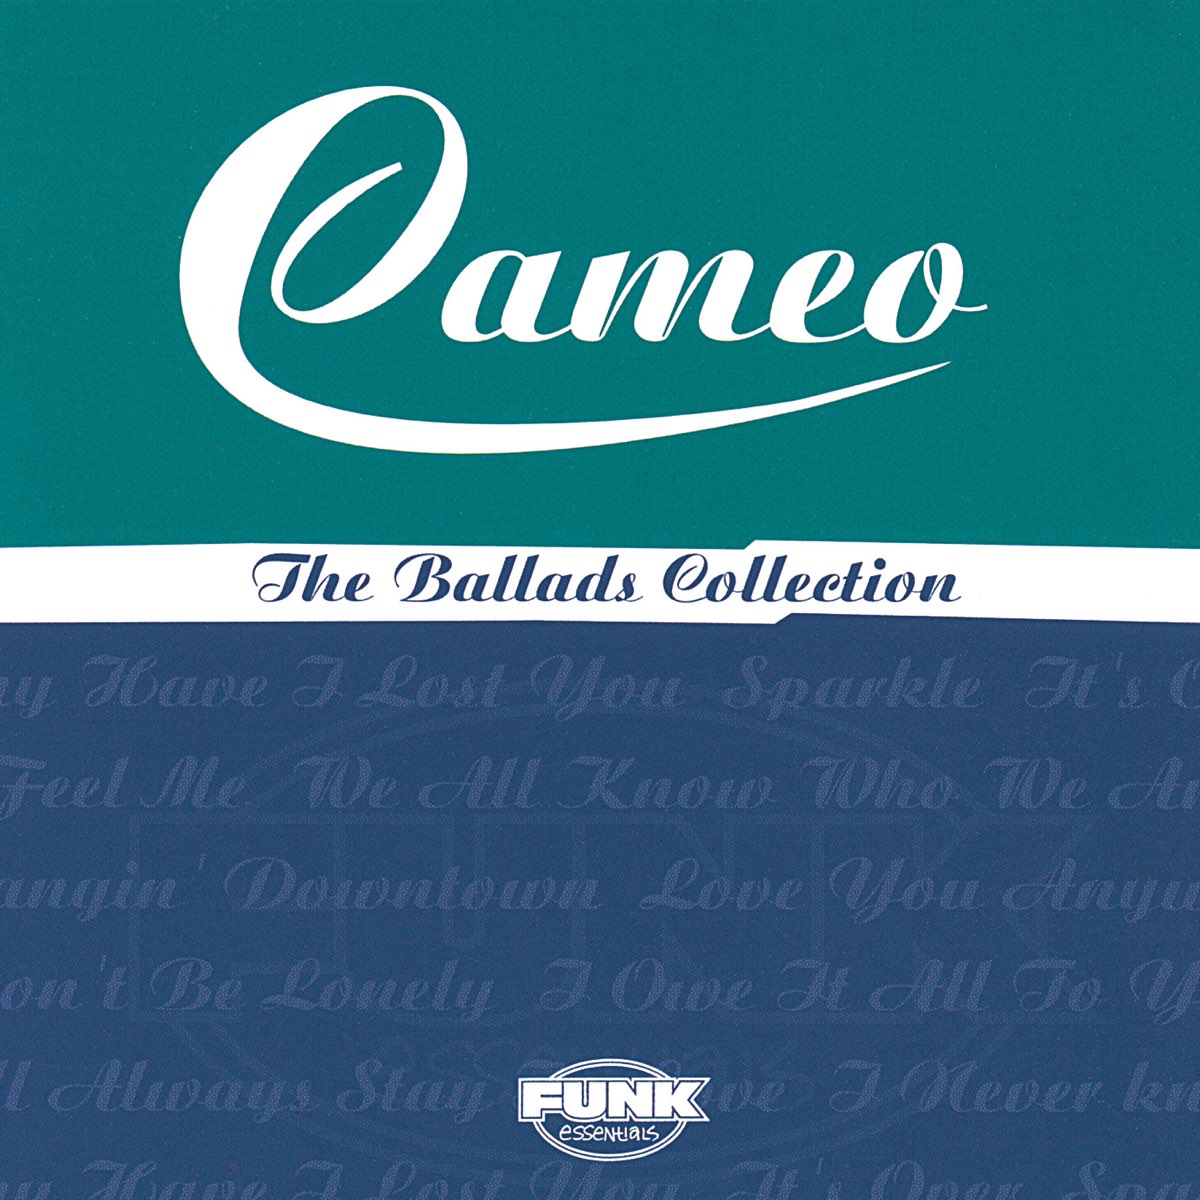 Cameo Band. Ballads collection.